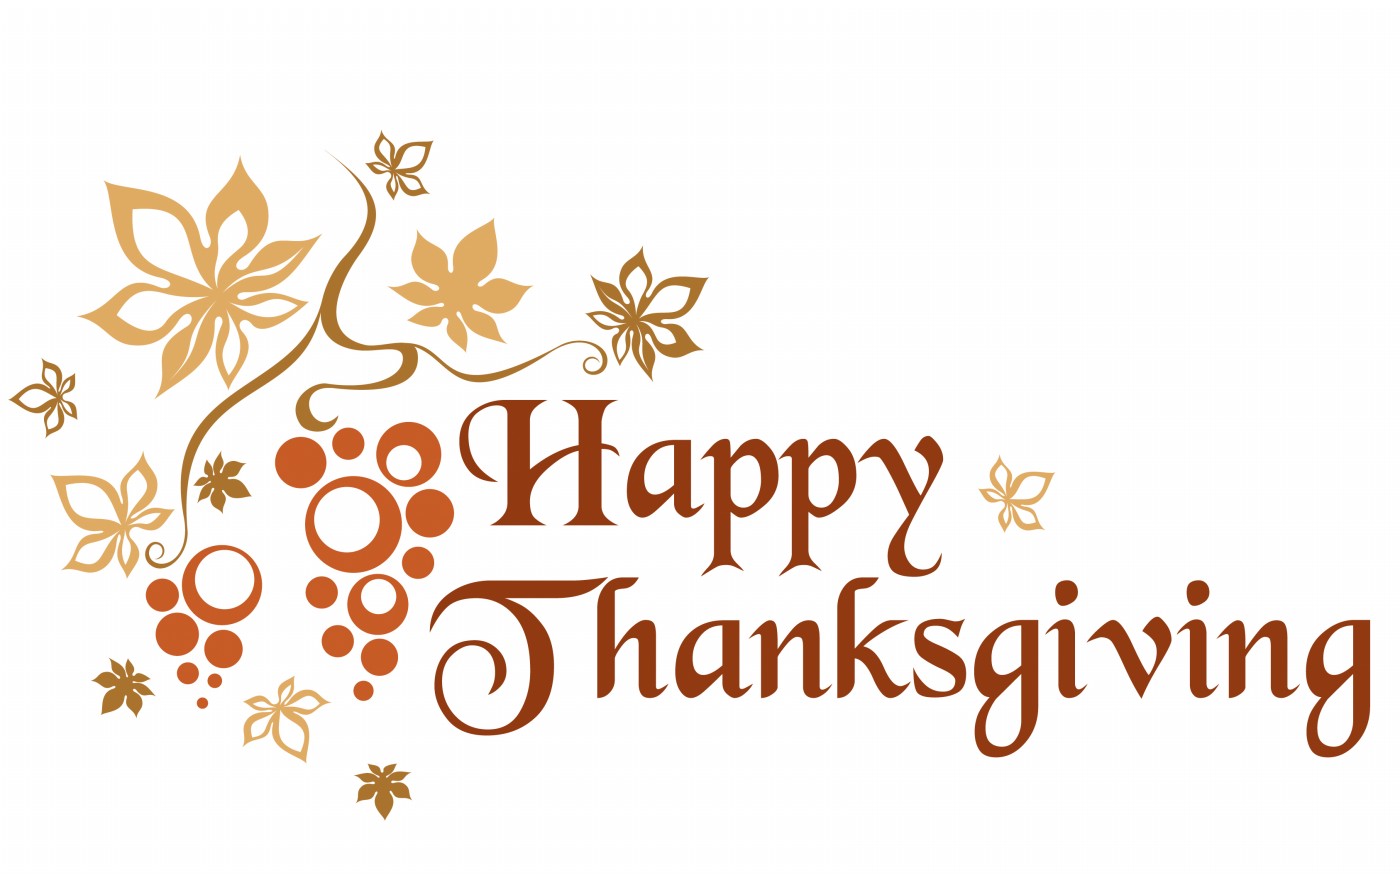 Happy thanksgiving everyone transblue jpg